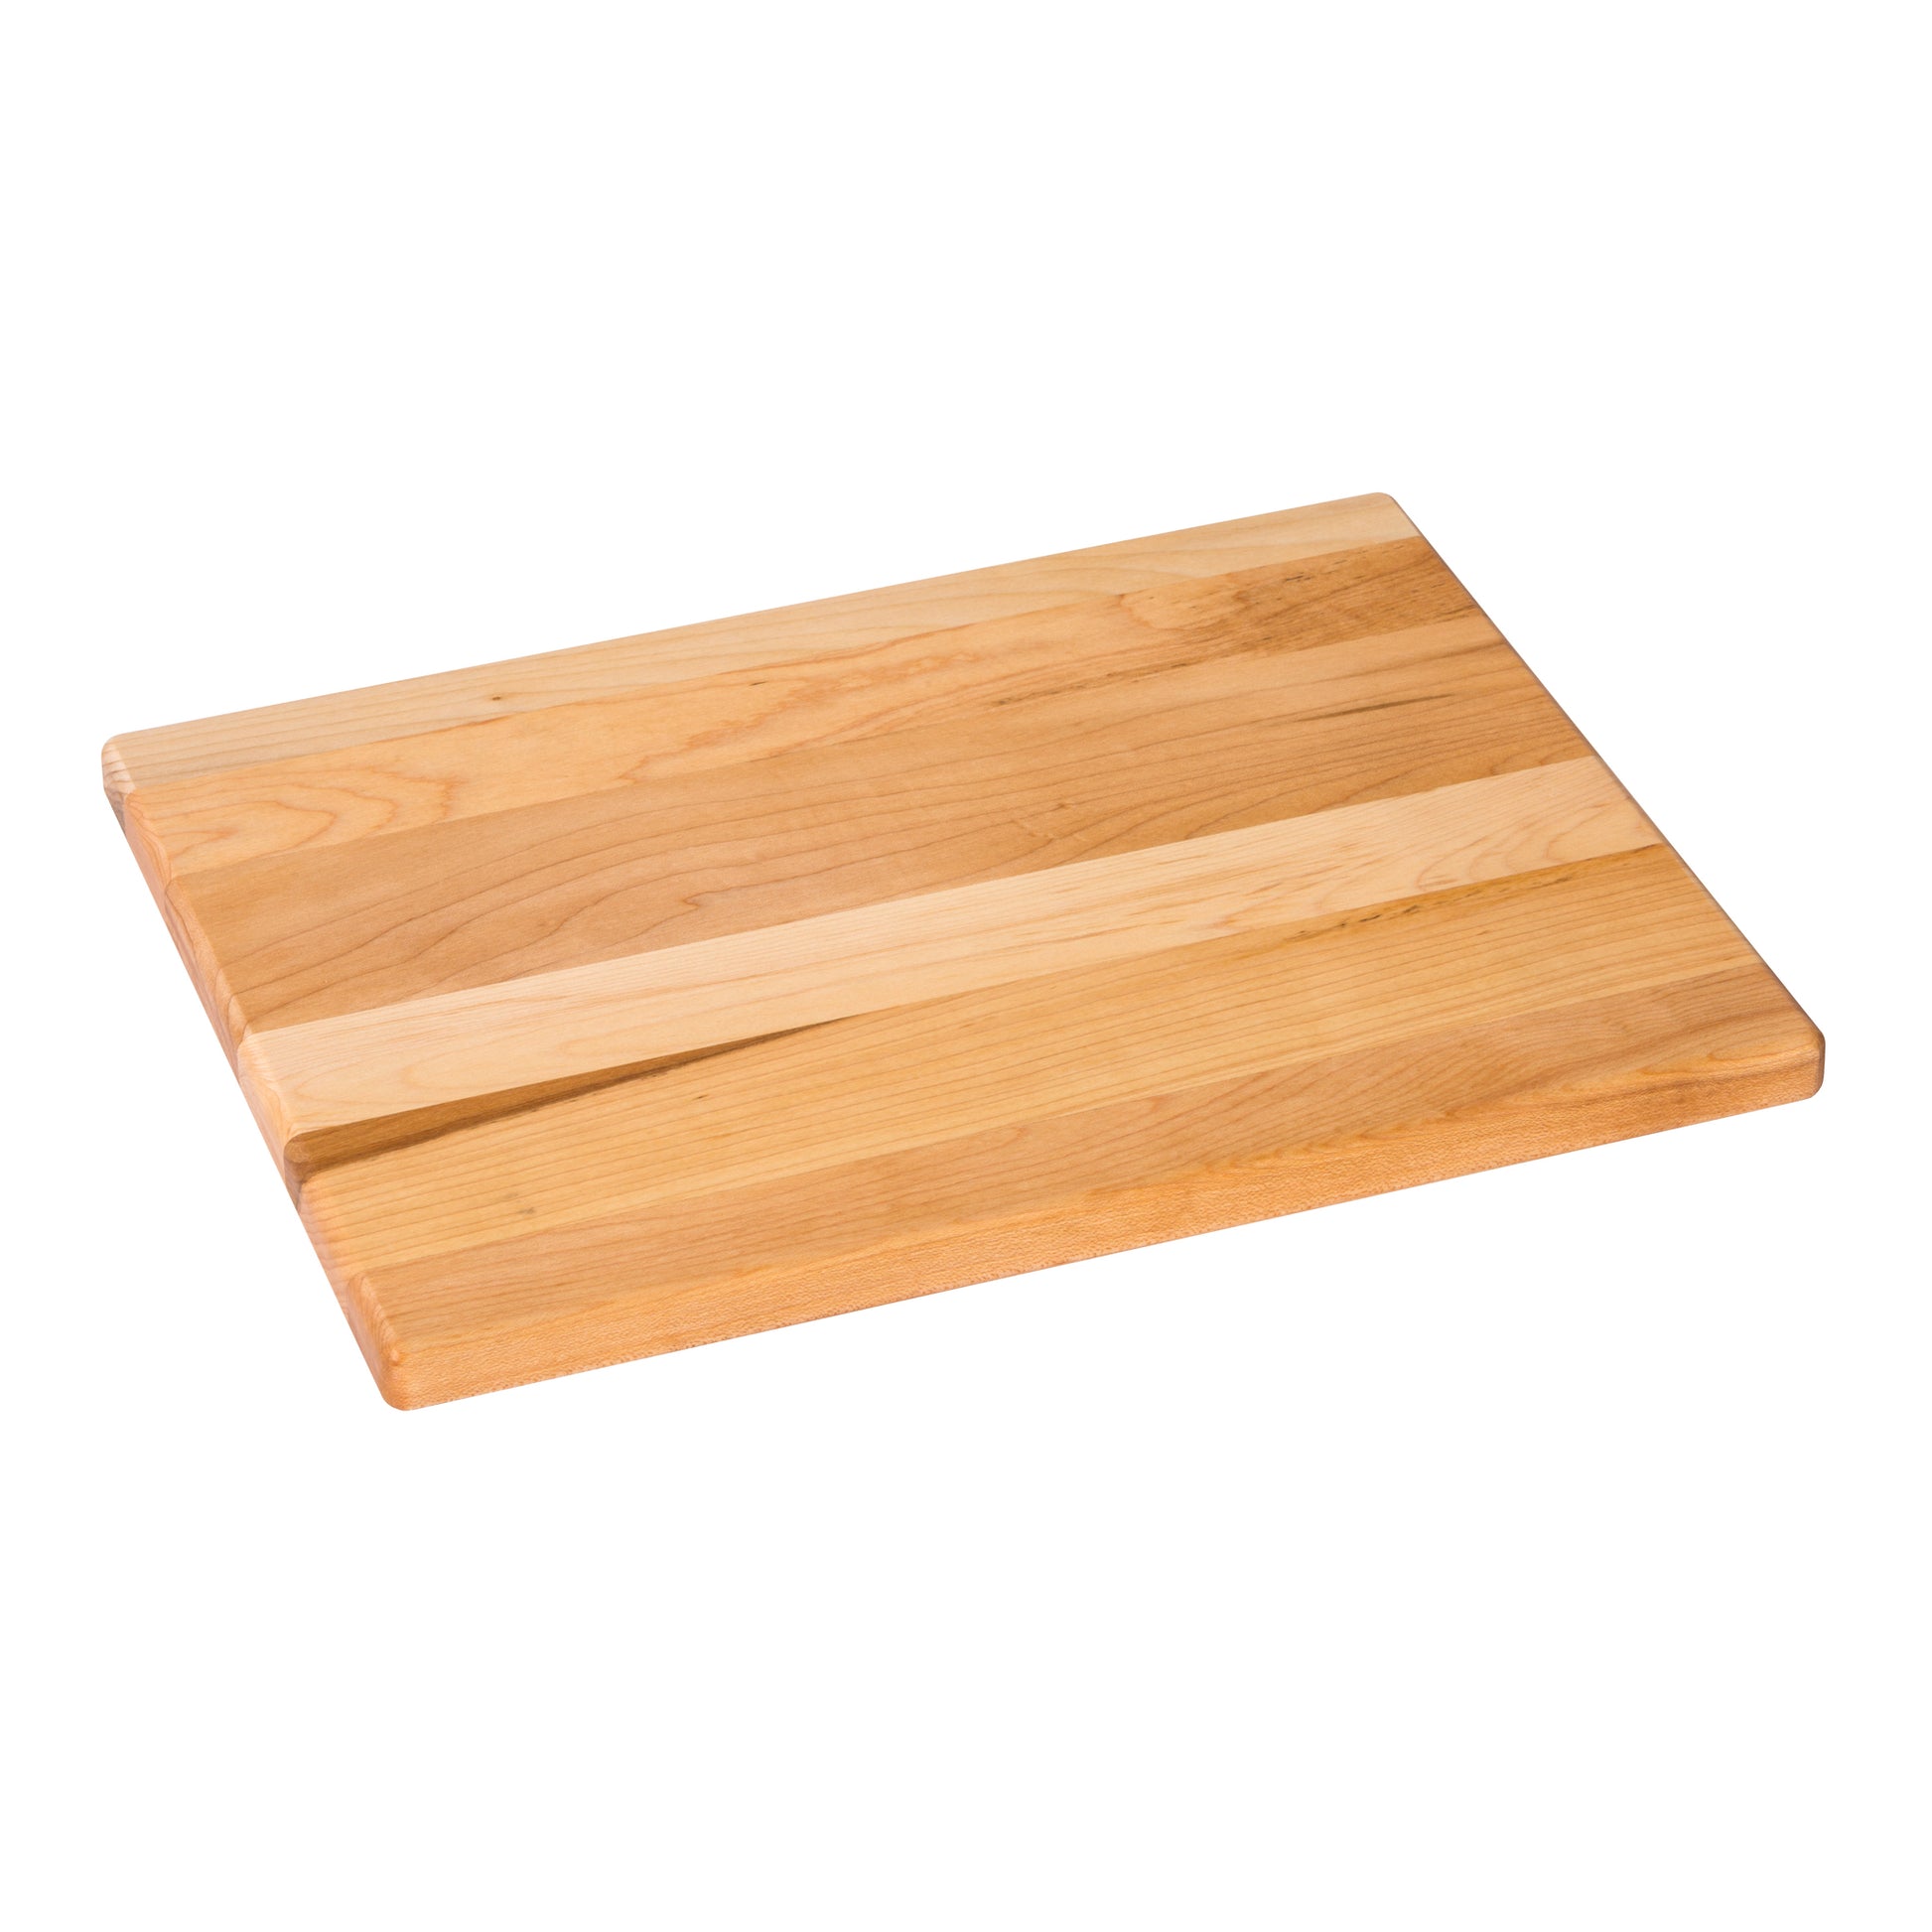 JK Adams Kitchen Basic Board - 14x11